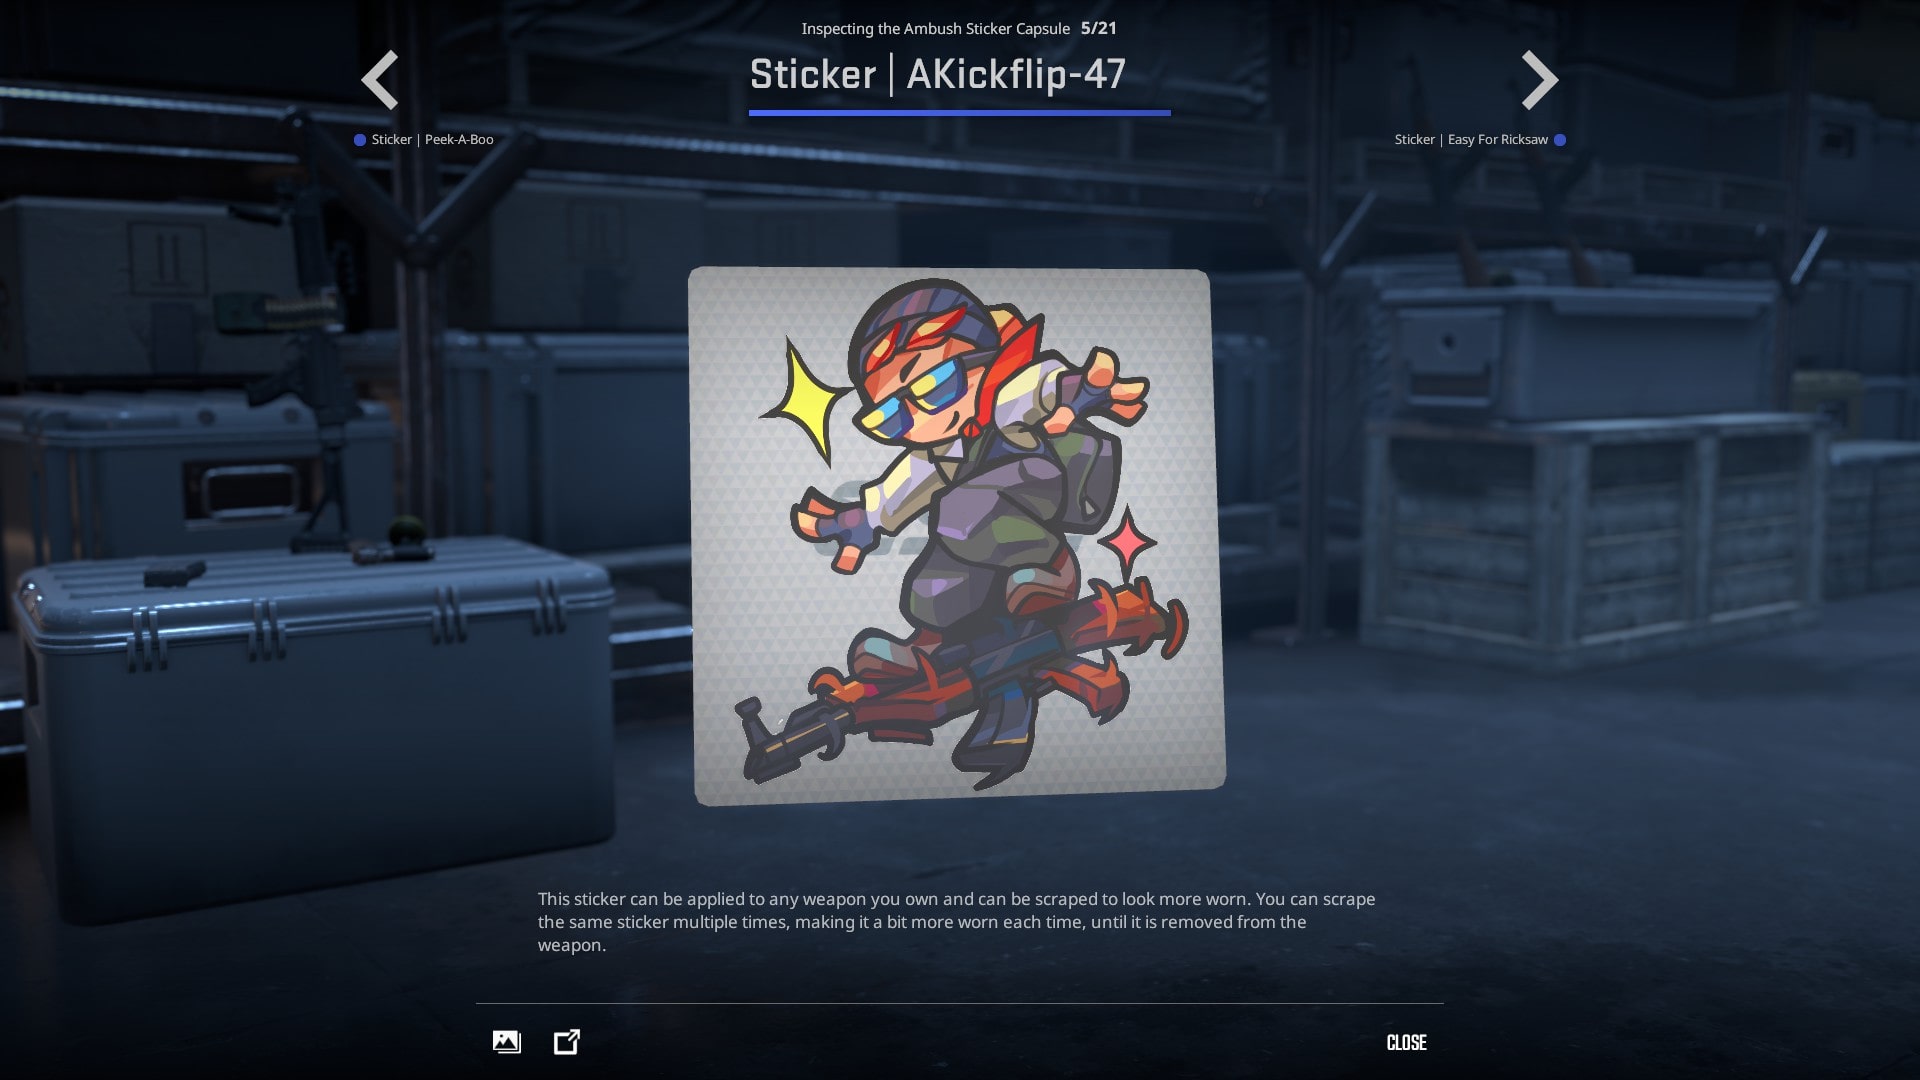 Ambush Sticker Capsule